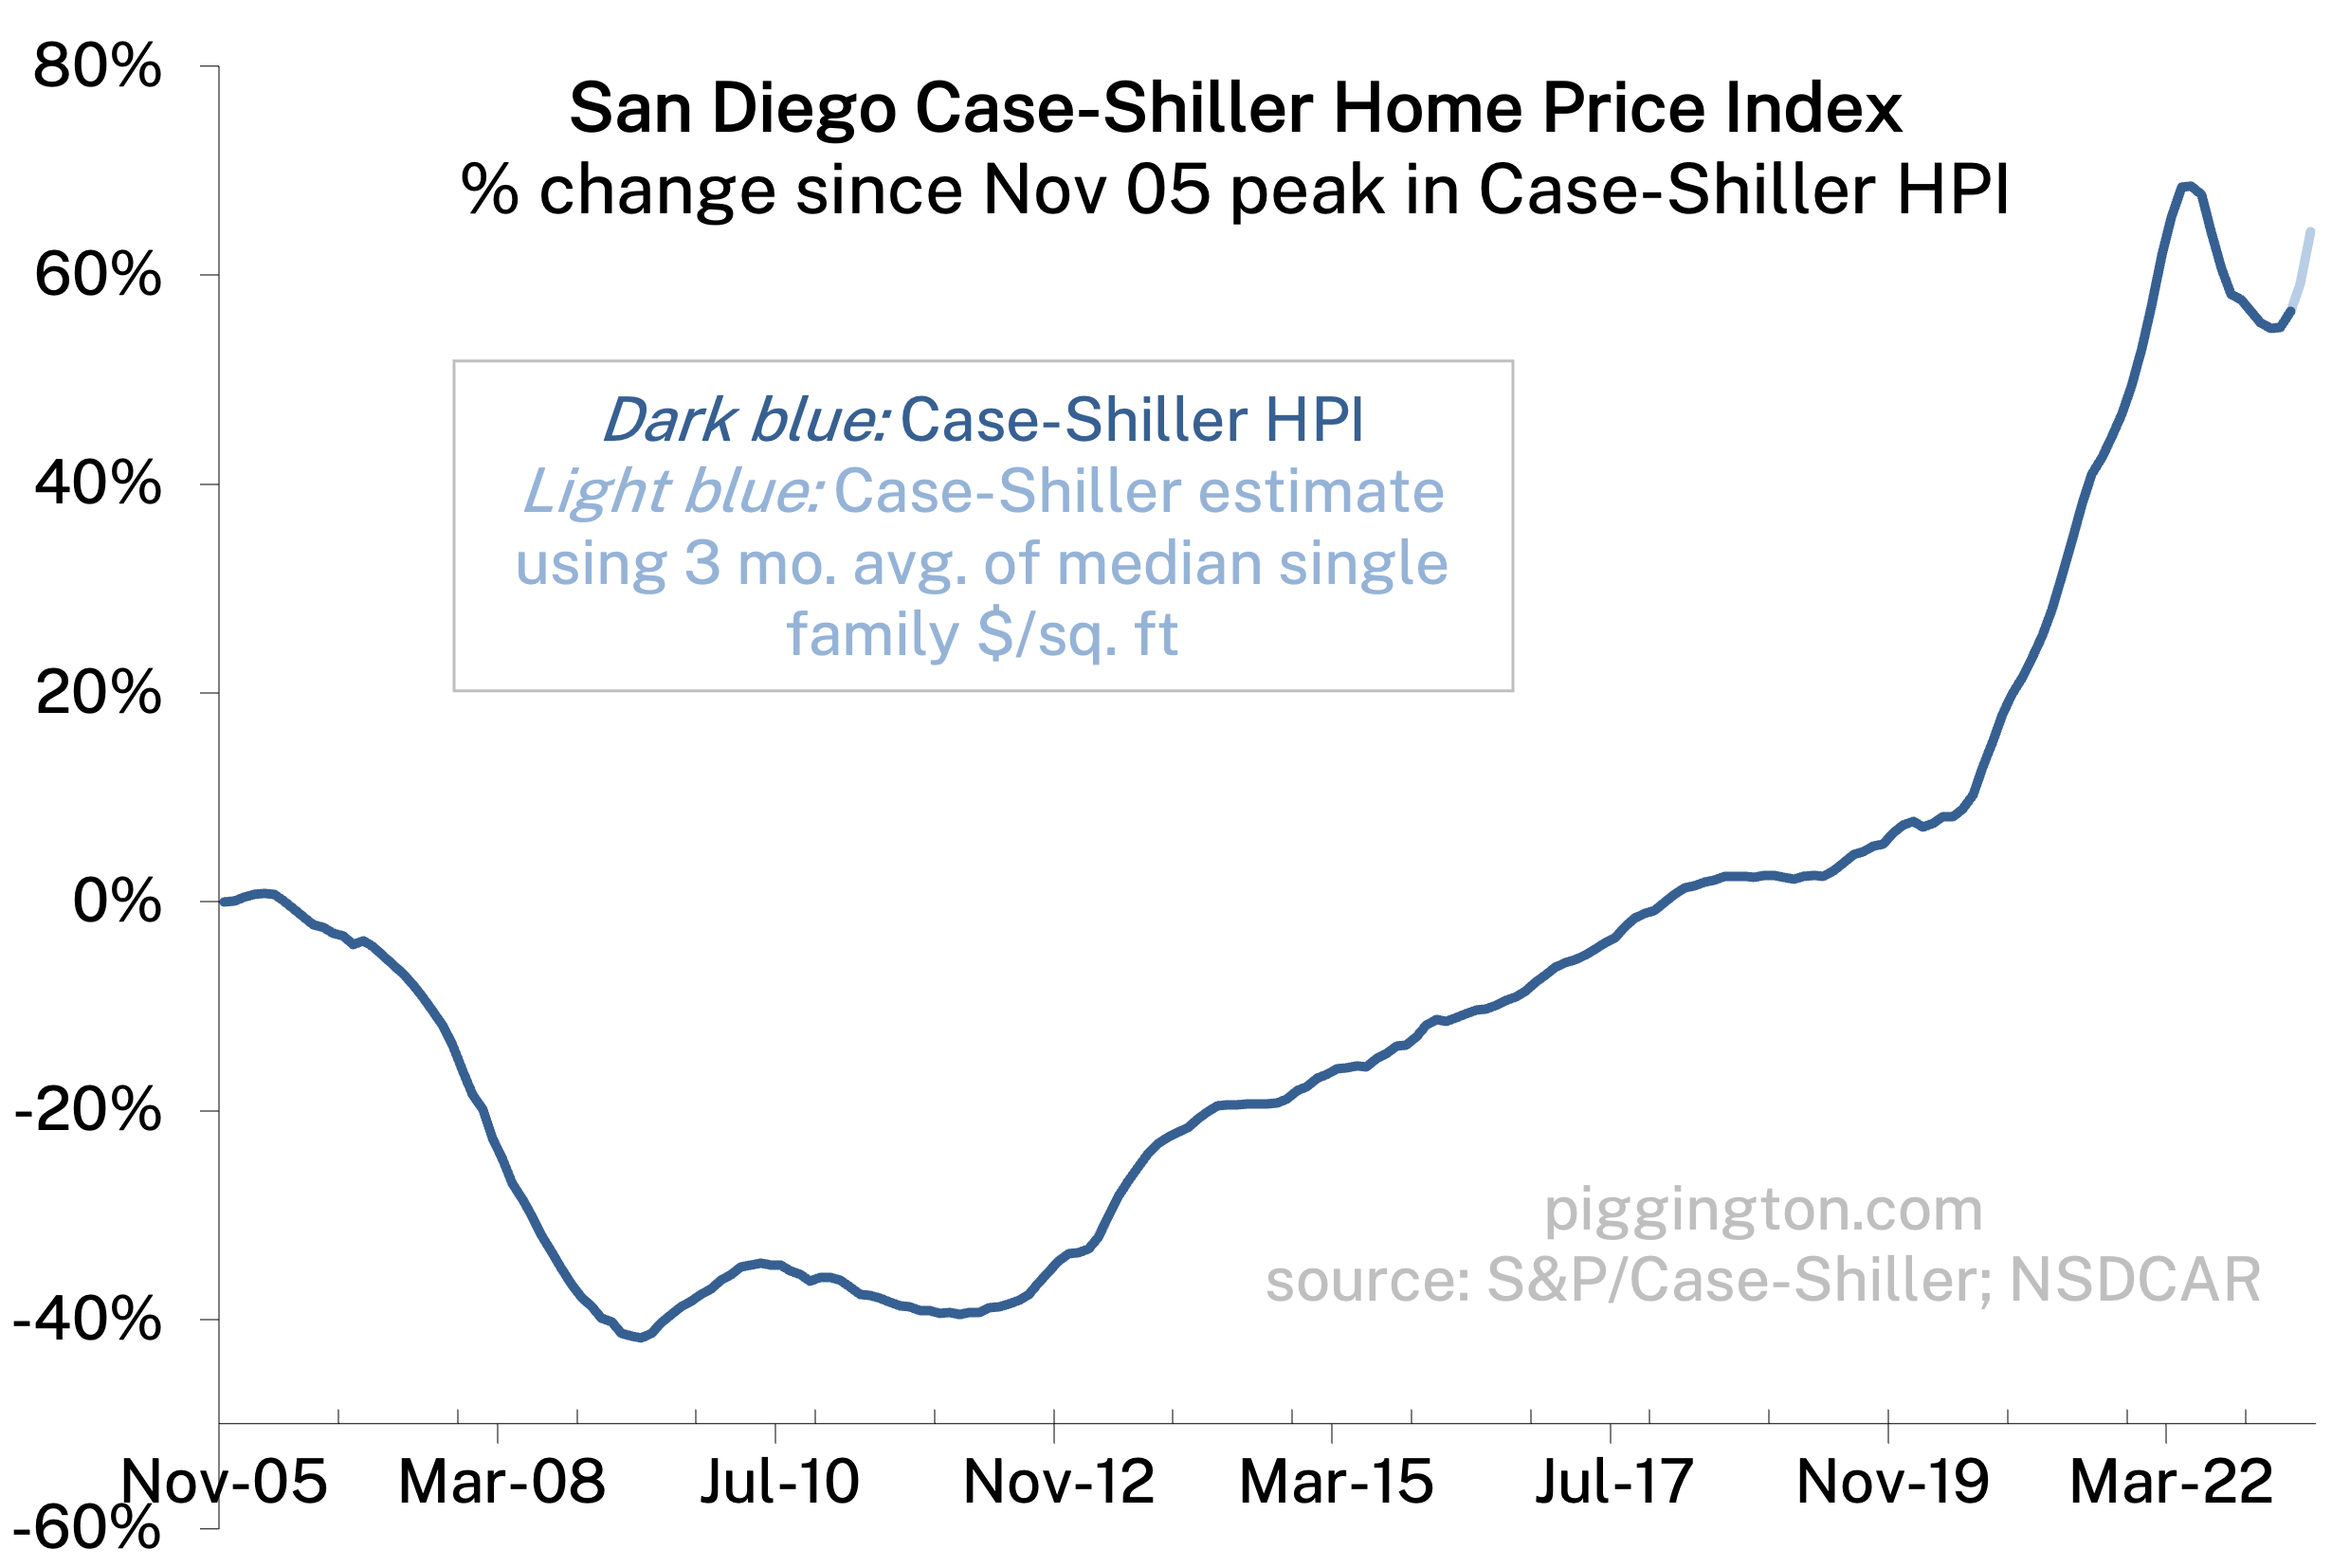 Case-Shiller Home Price Index